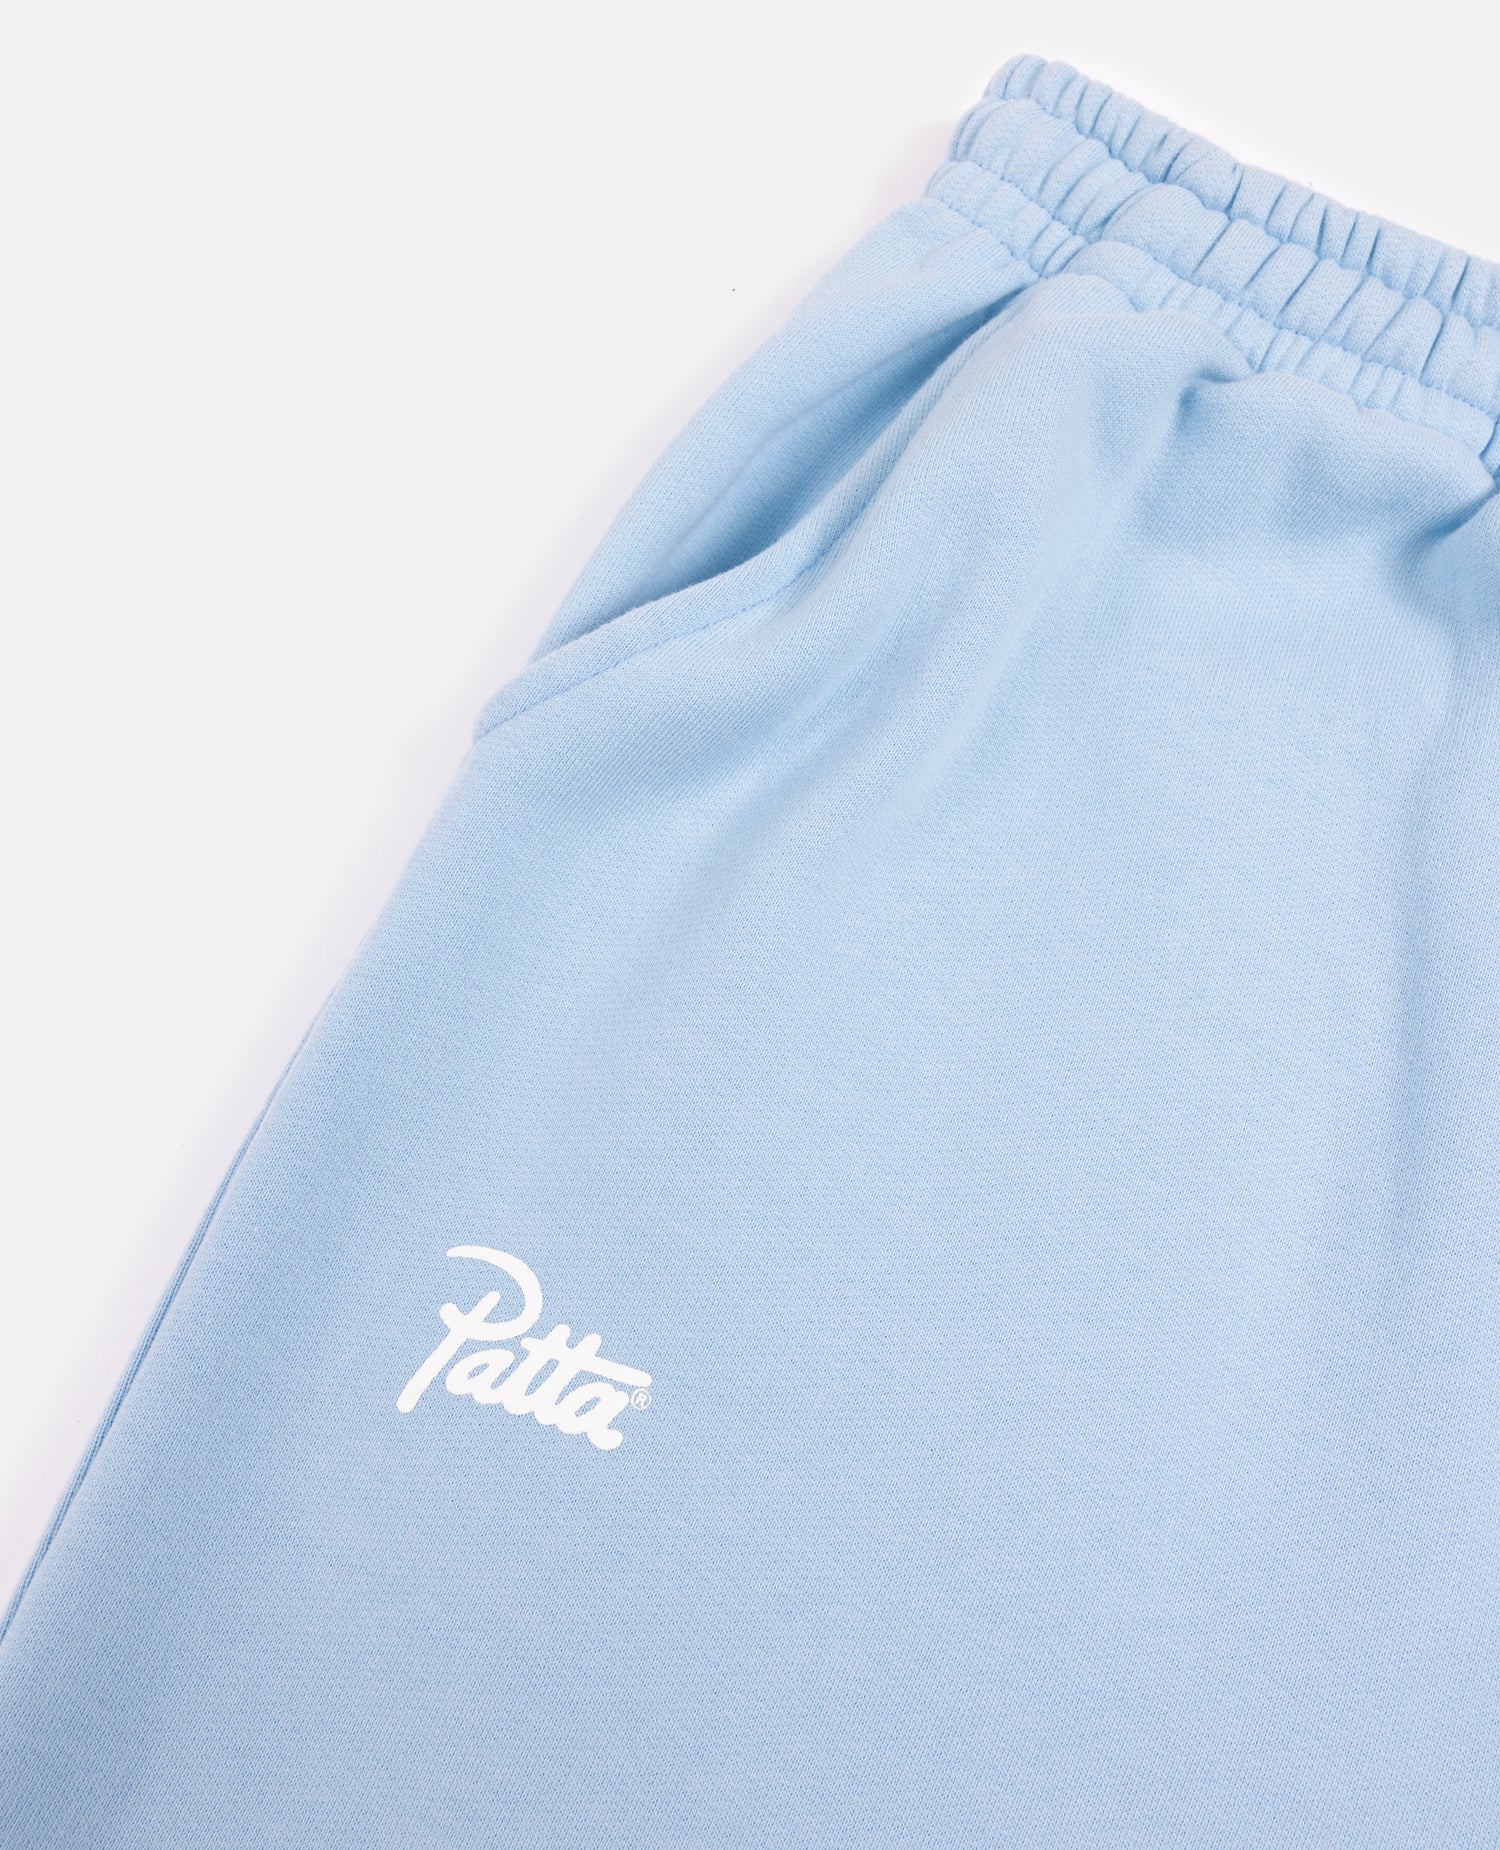 Patta Femme Basic Jogging Pants (Blue Bell)